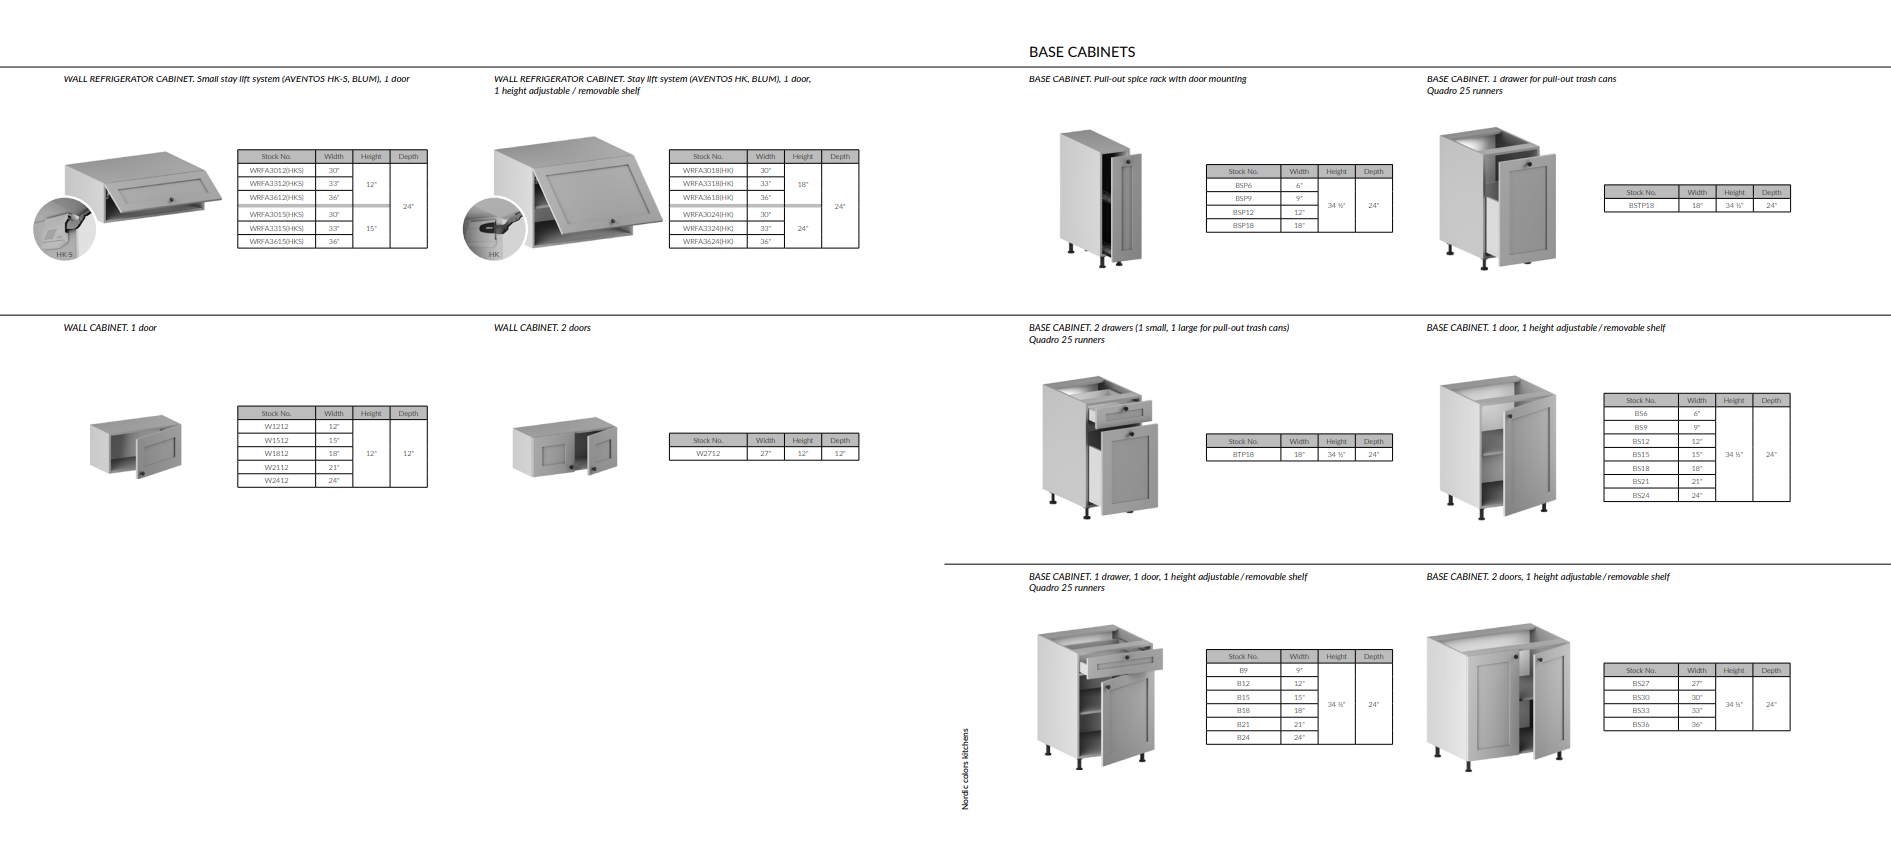 more cabinet options scheme - 2-dor cabinet, 3-door cabinet, base cabinet etc.